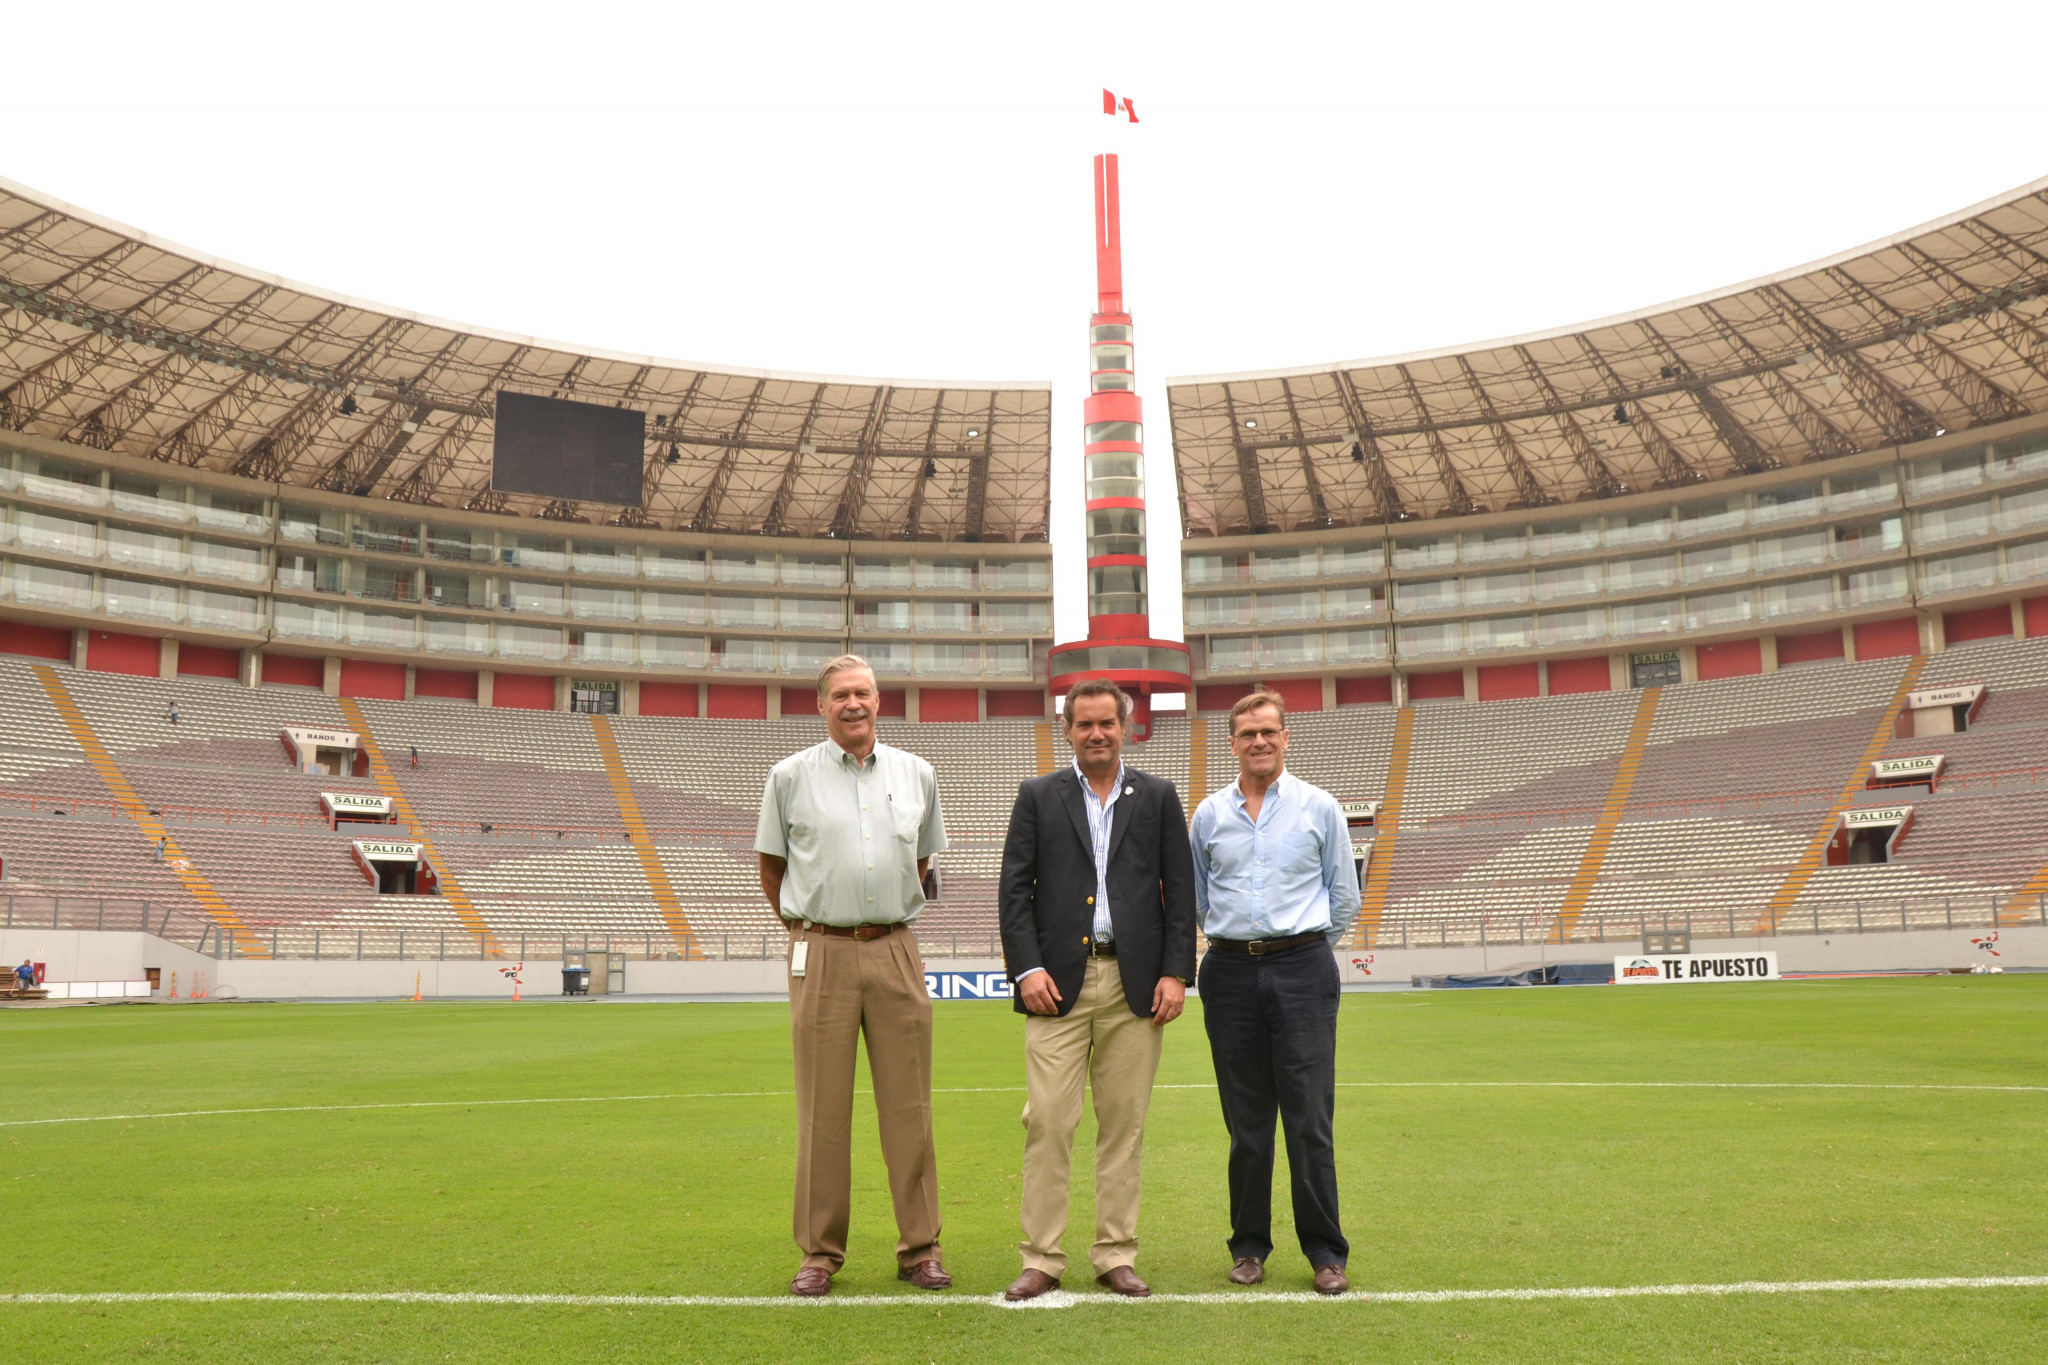 Peru's national stadium was also visited ©Lima 2019